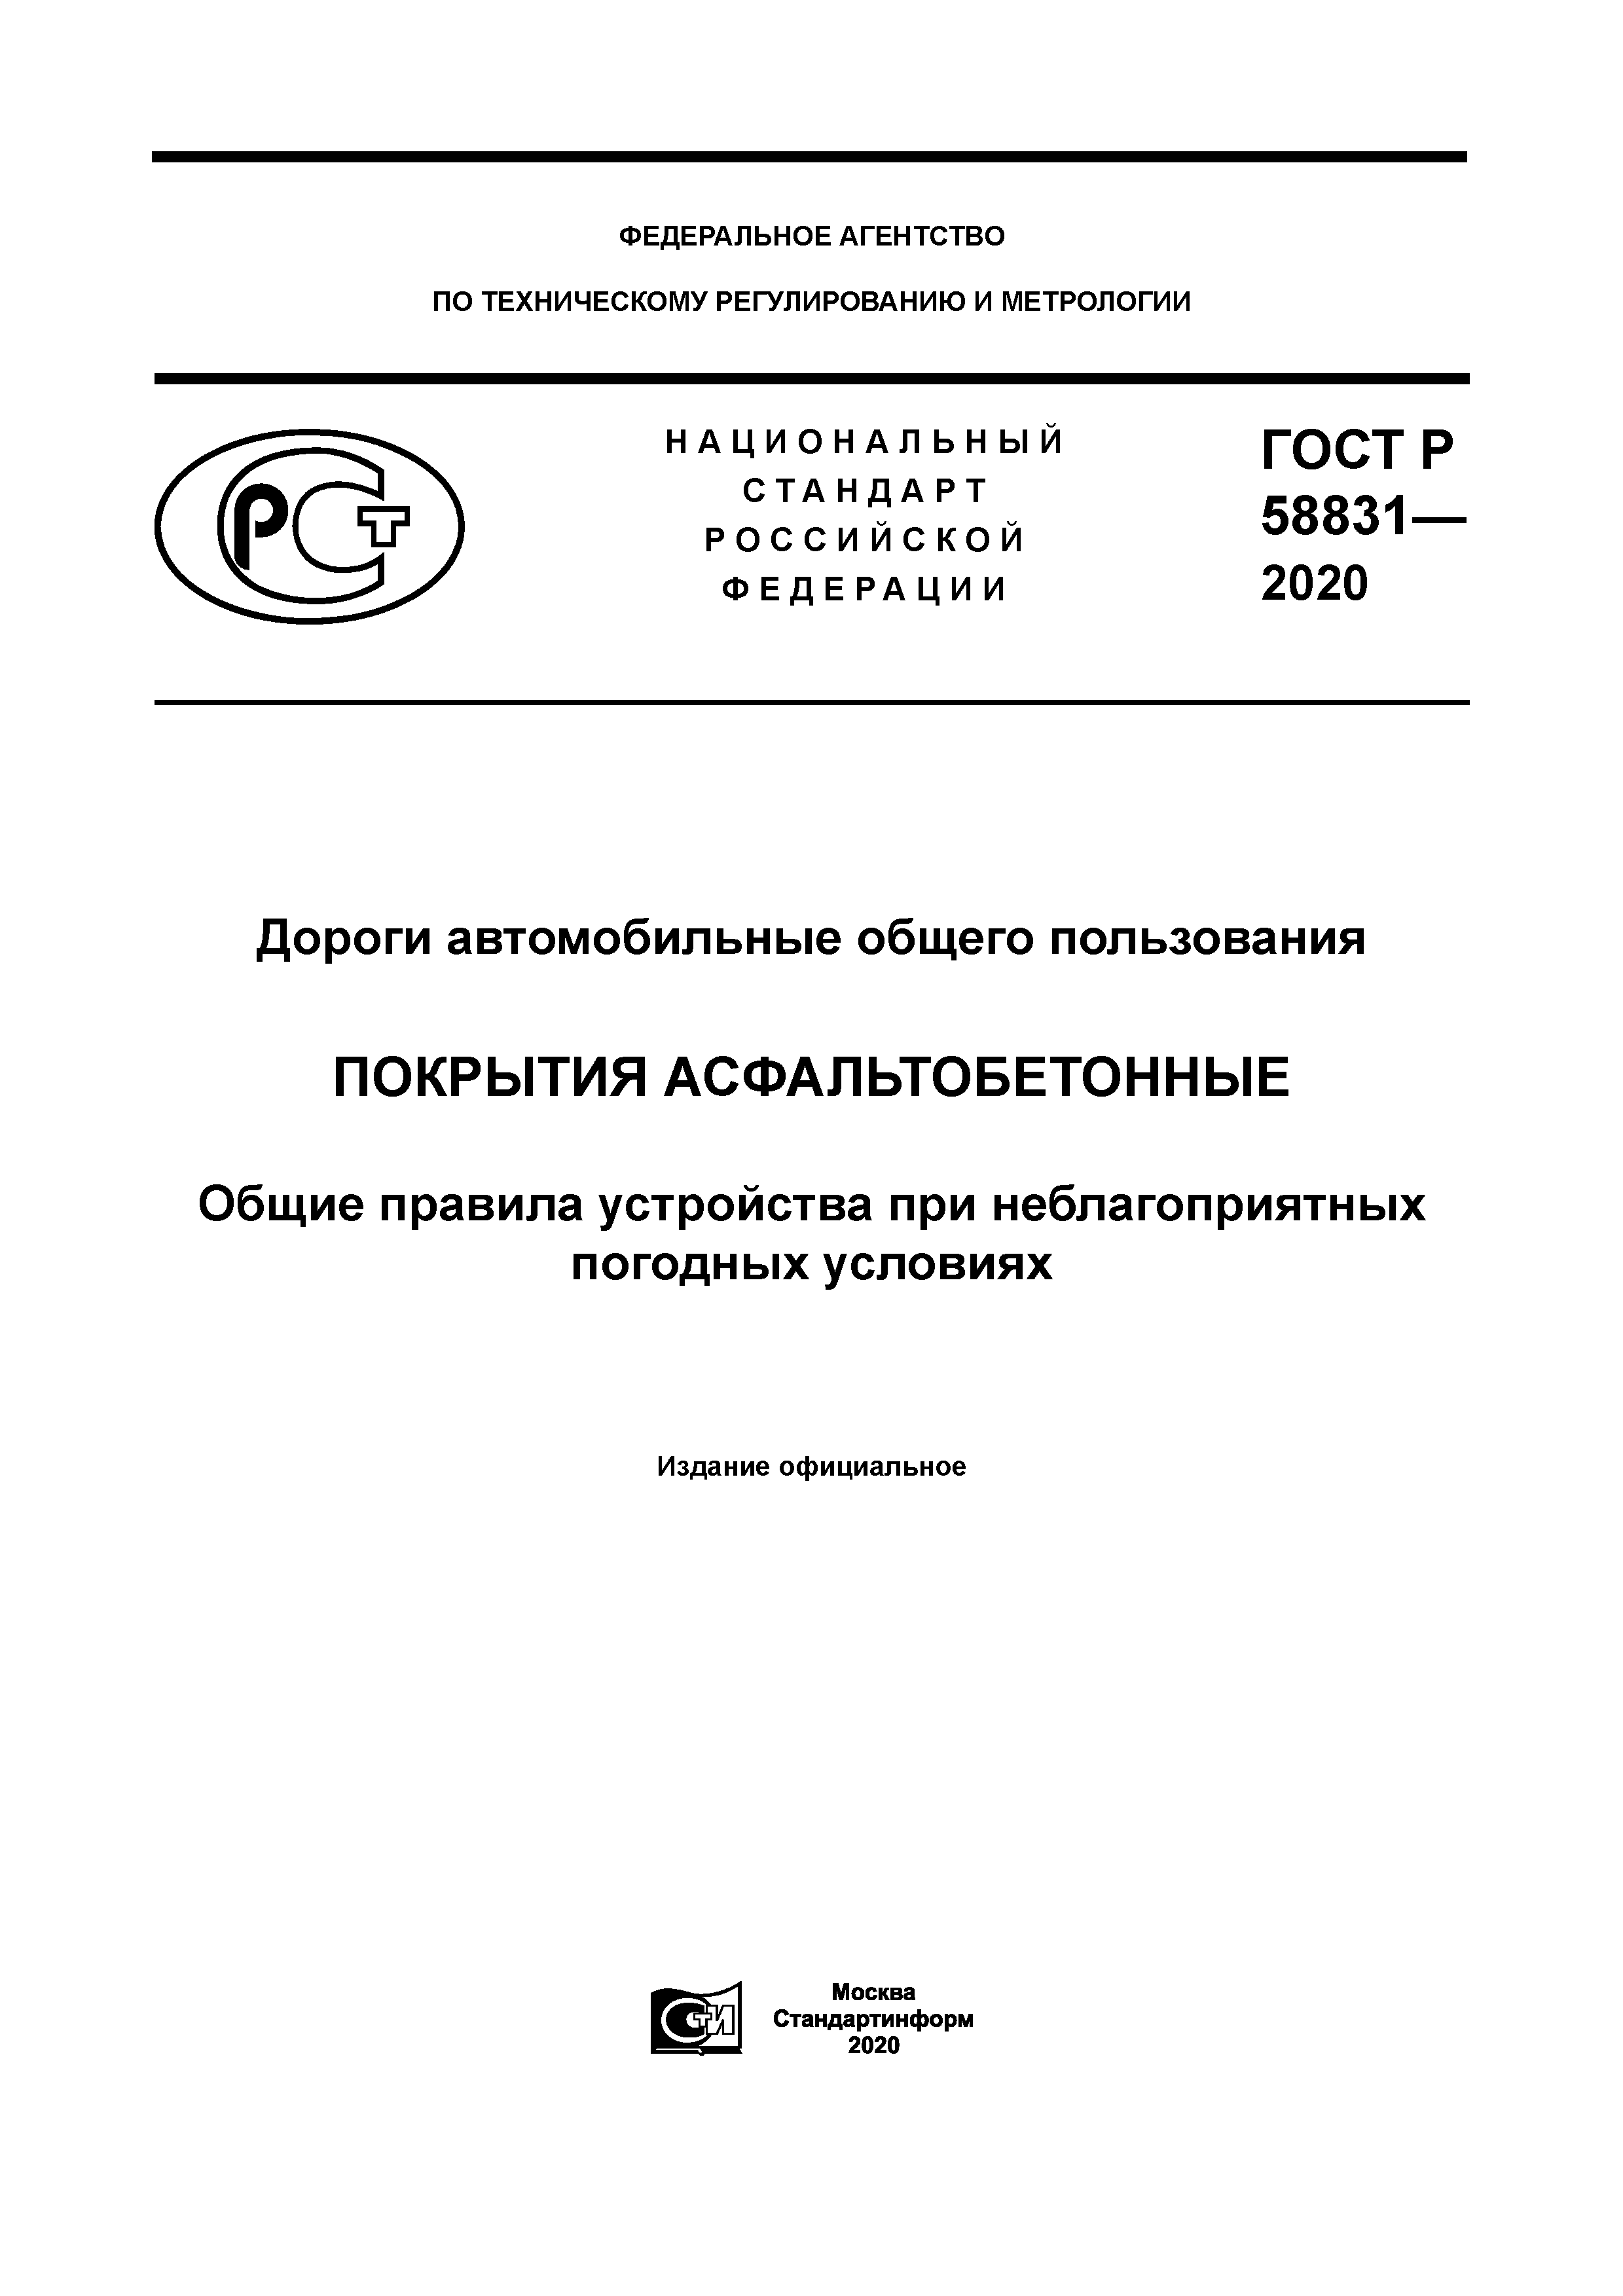 ГОСТ Р 58831-2020